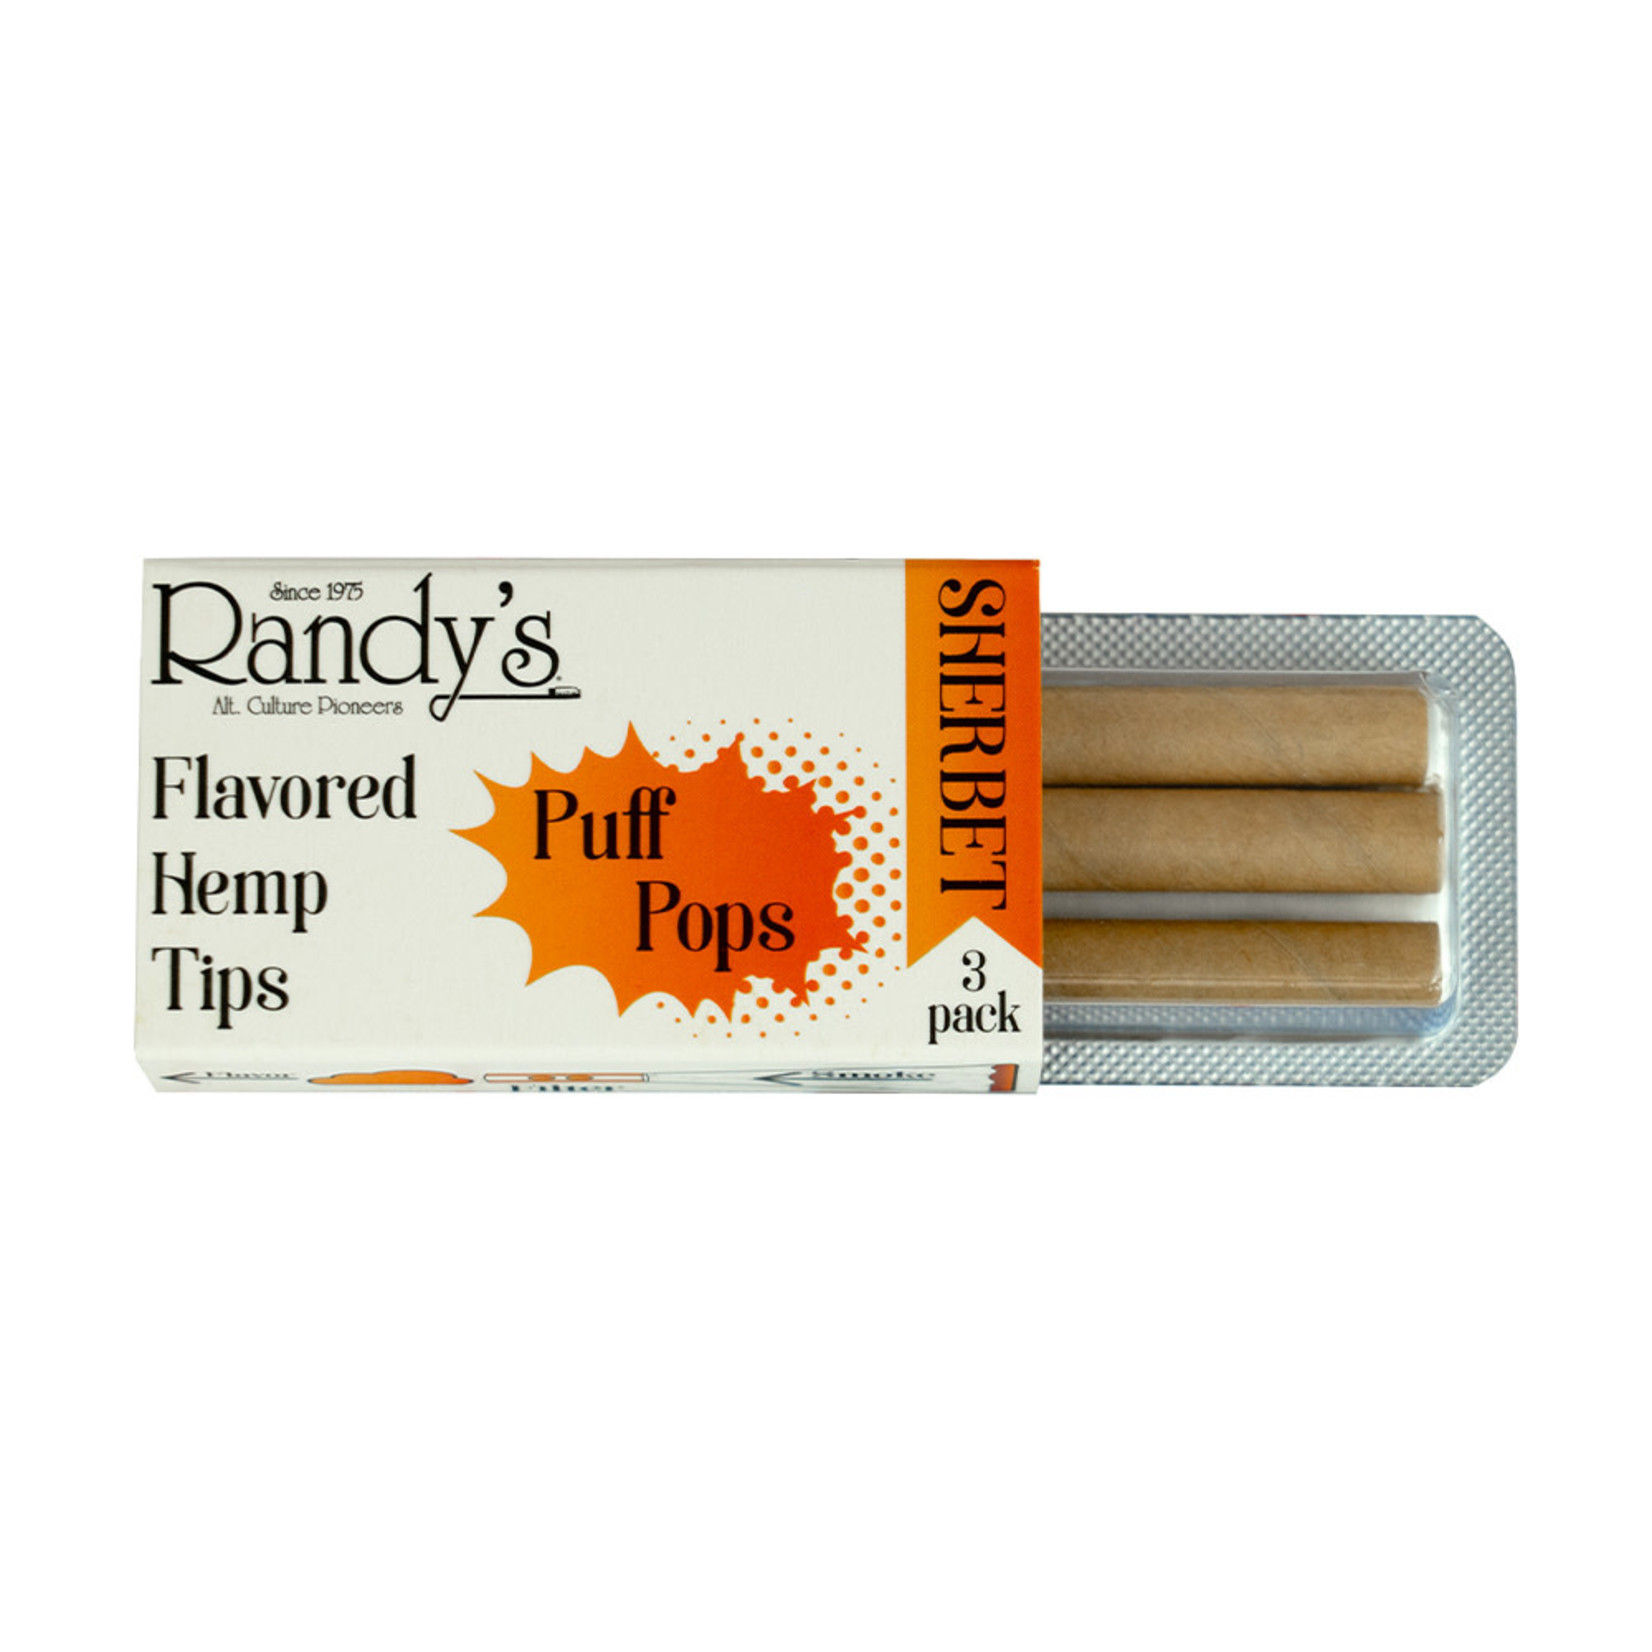 Randy's Randy's Puff Pops - Flavored Hemp Tips